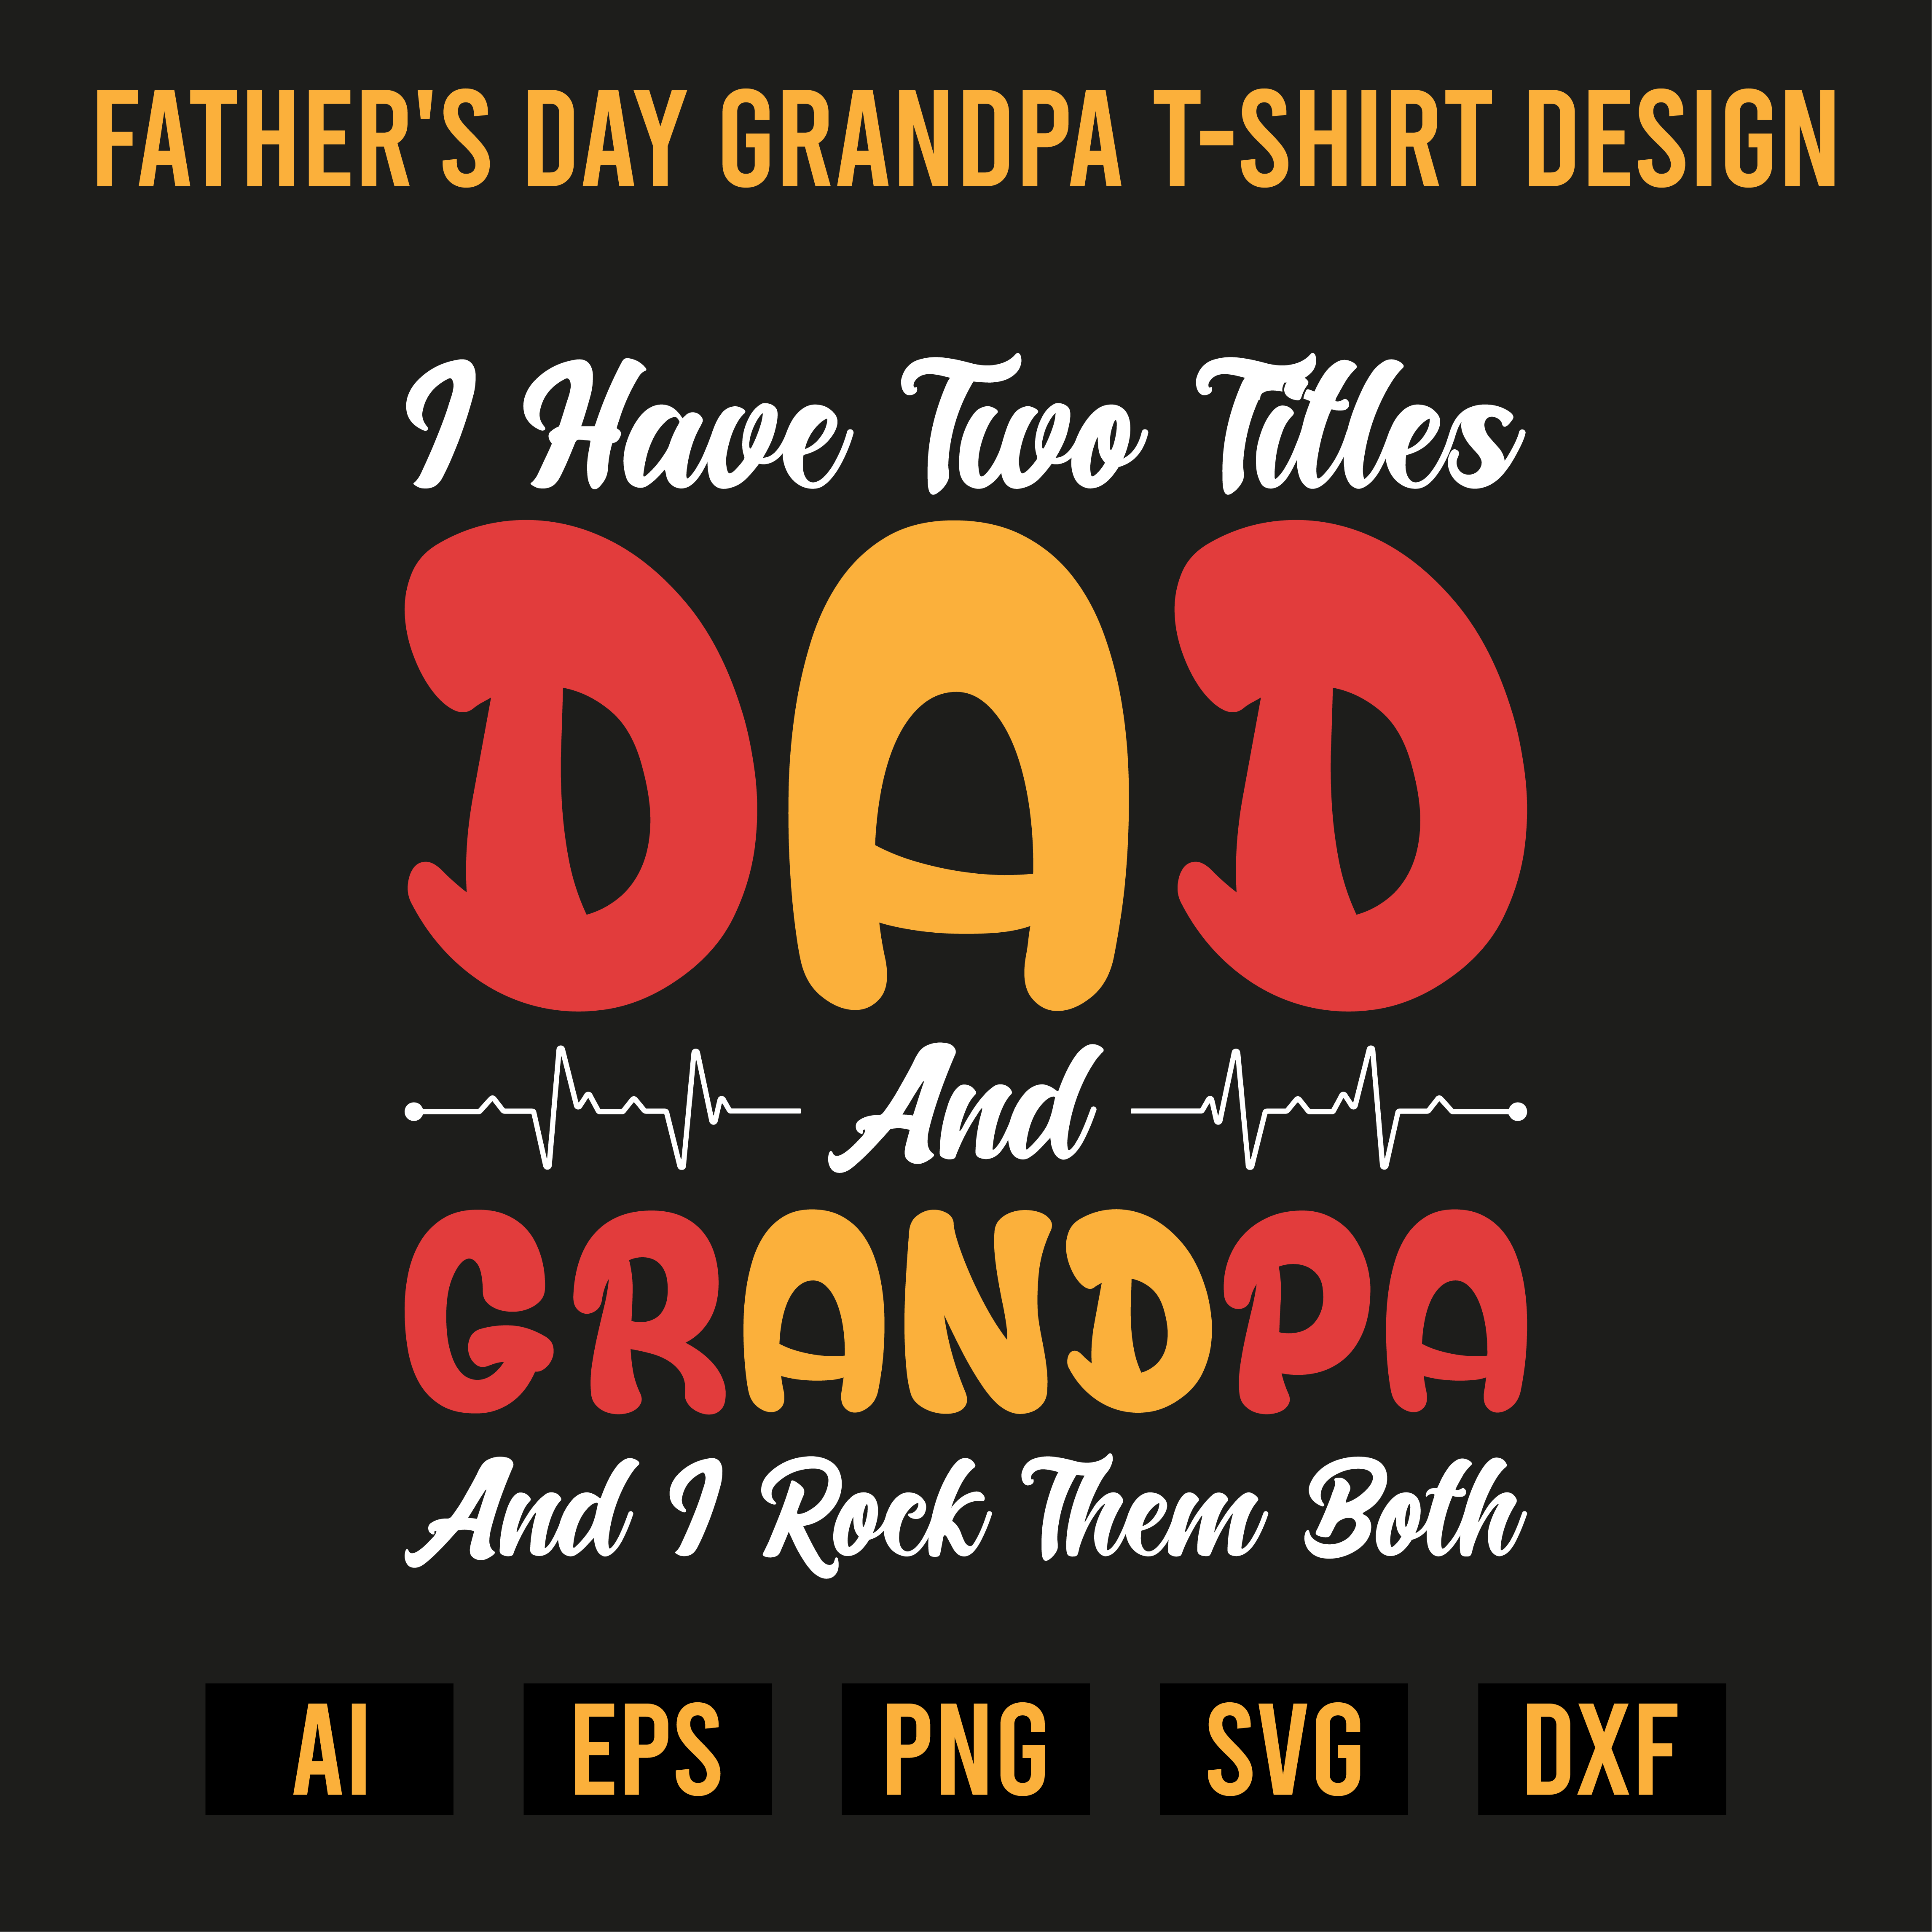 Father's Day Grandpa T-Shirt Design preview image.